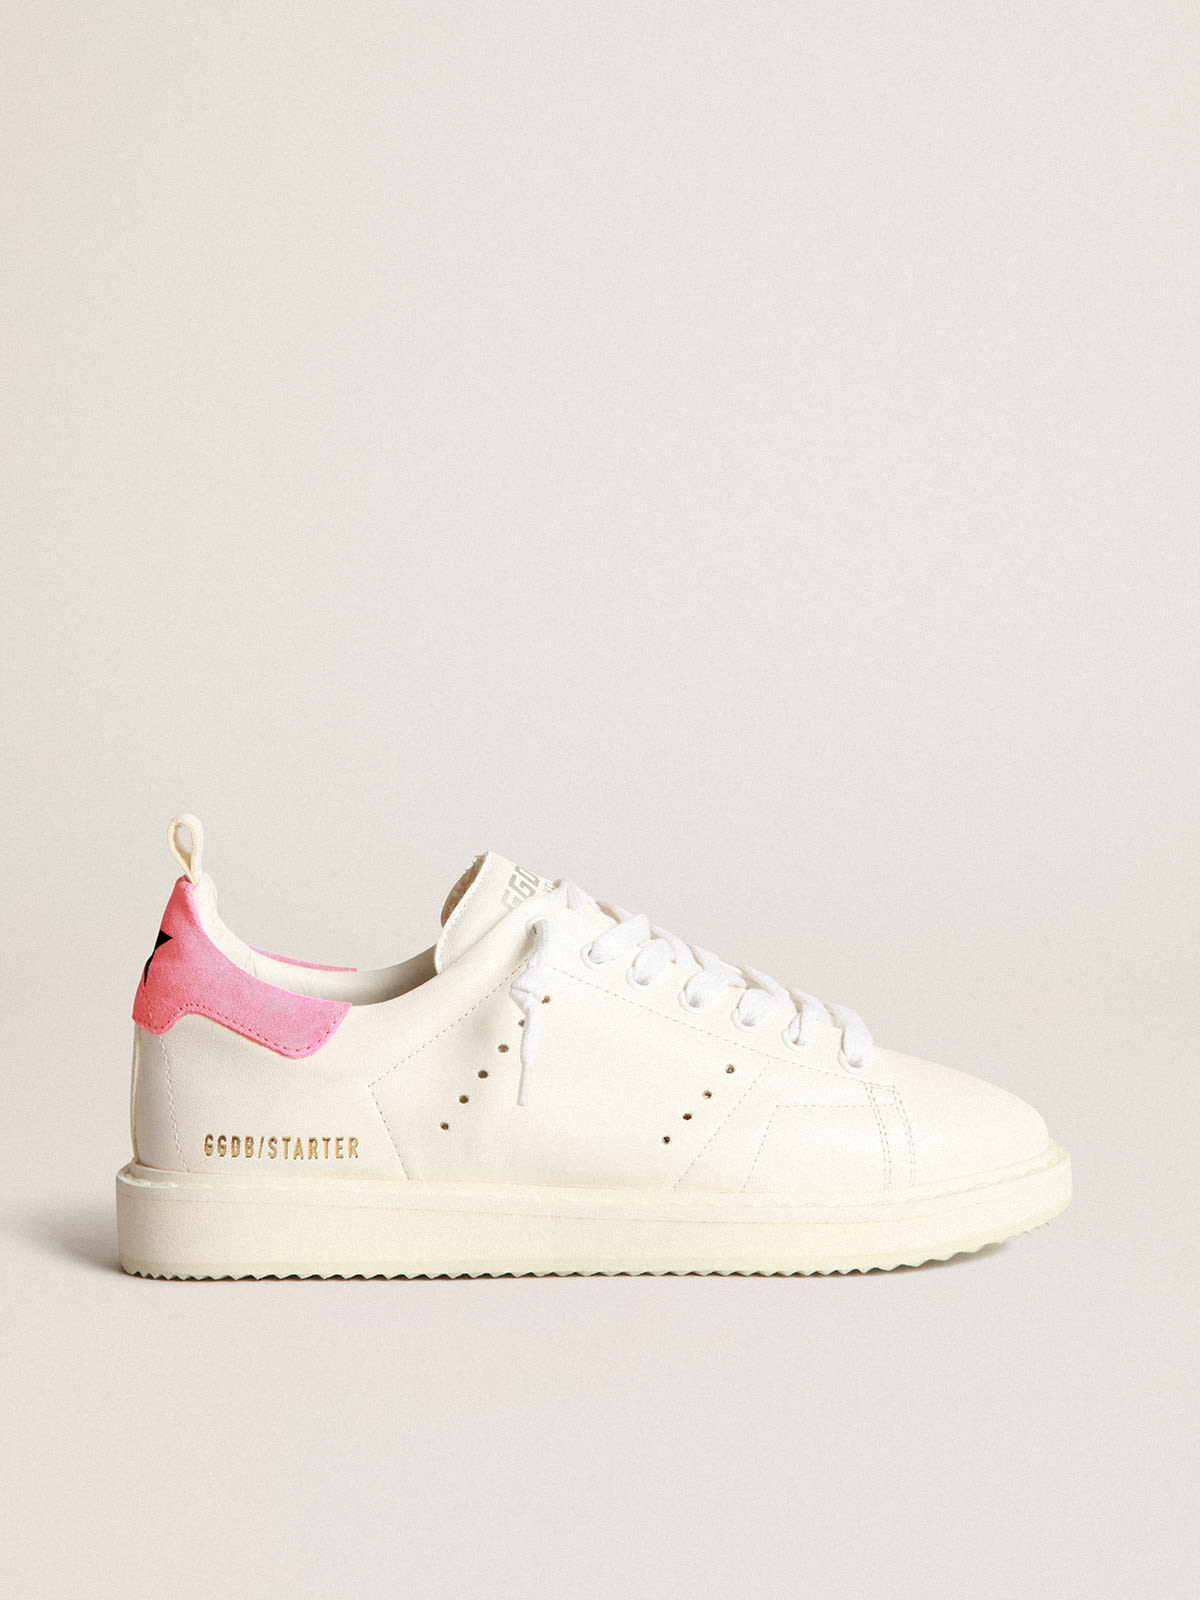 Golden Goose - Sneakers Starter en cuir nappa blanc avec contrefort en daim rose in 